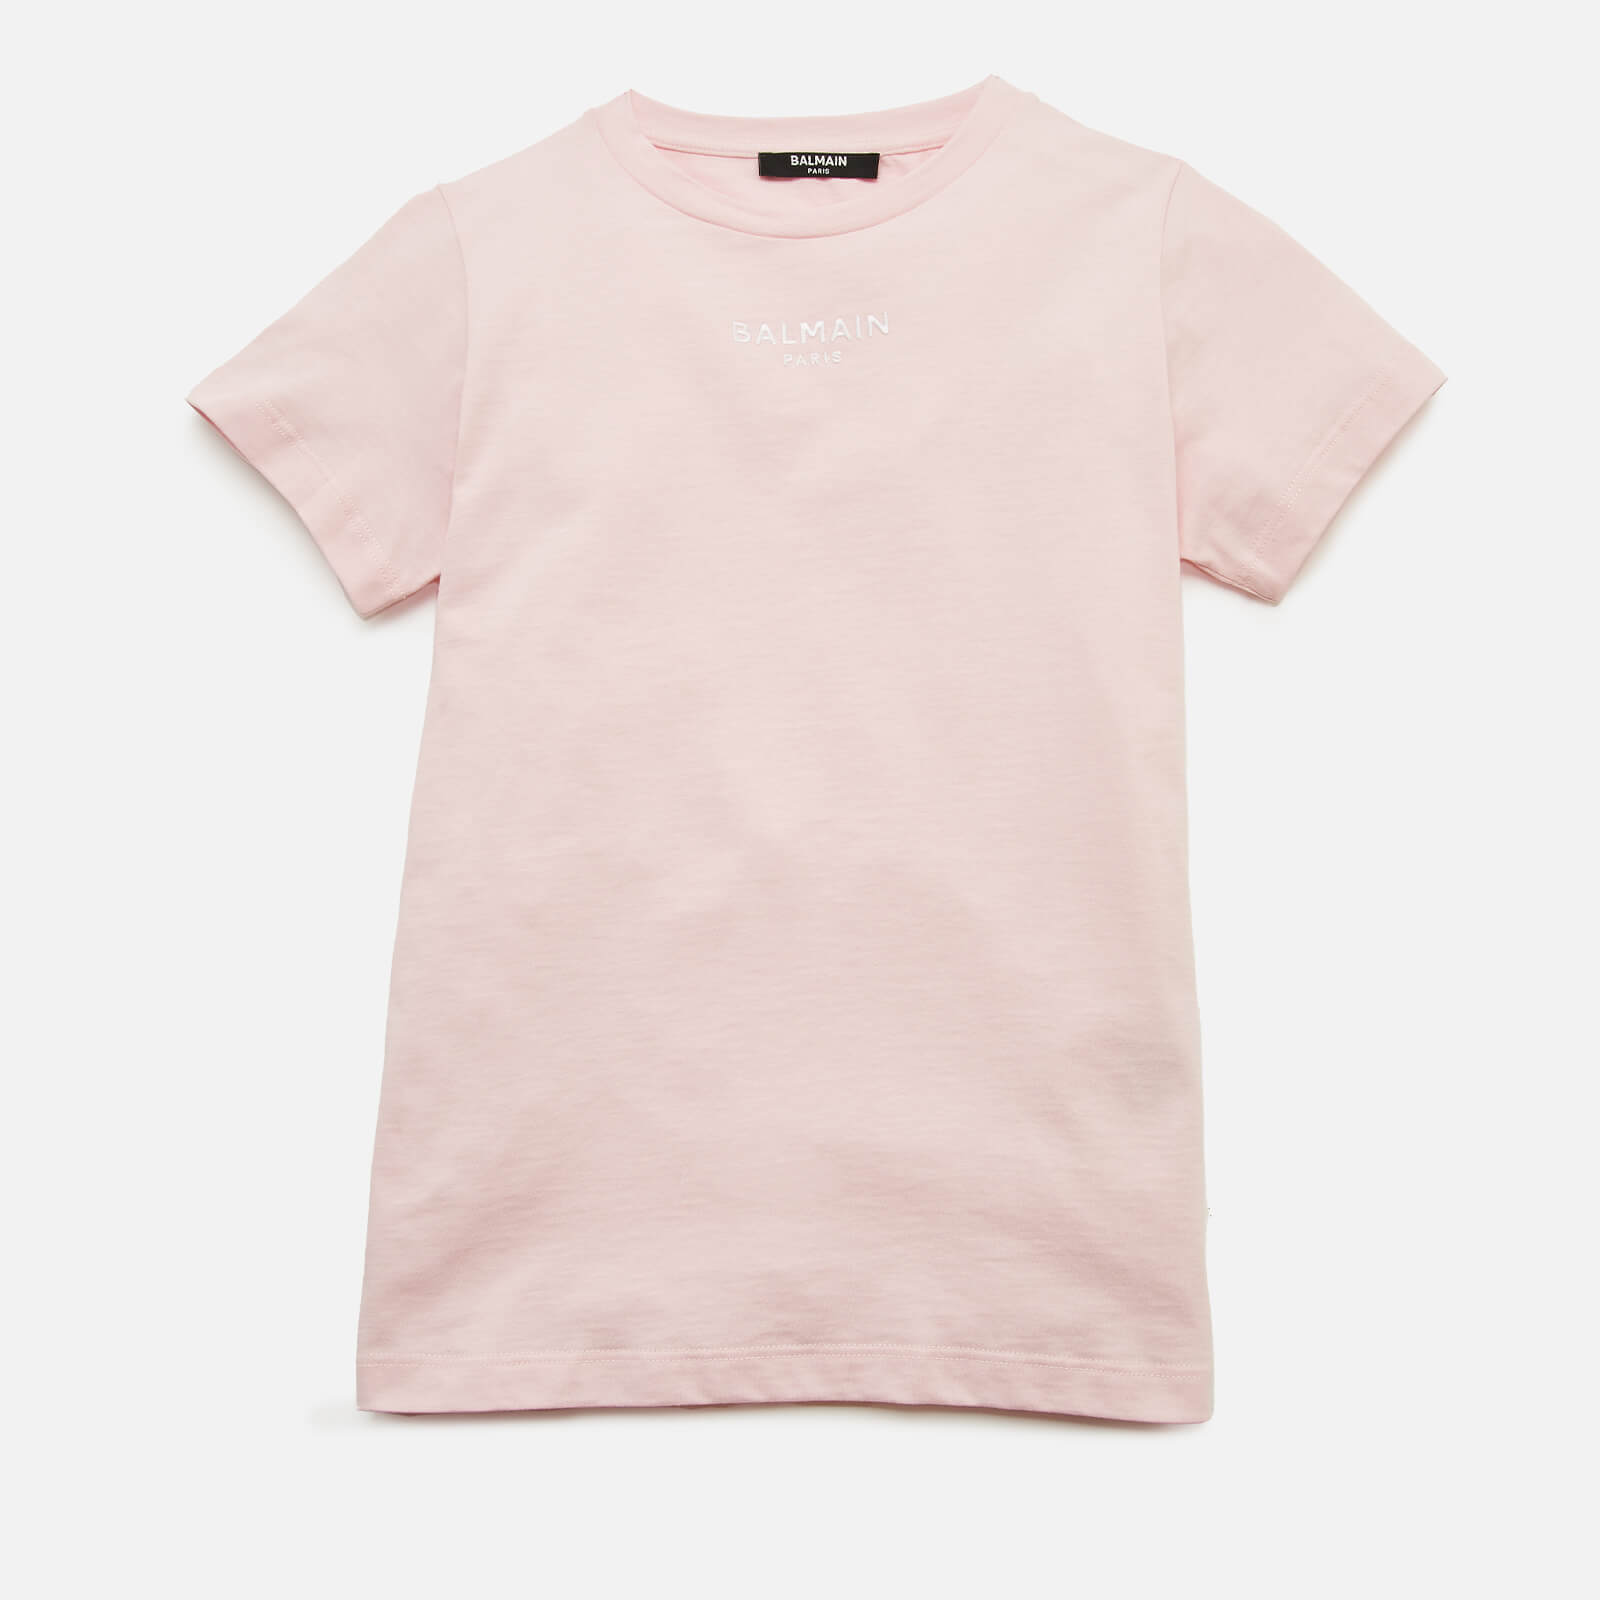 Balmain Boys' T-Shirt - Rosa/Bianco - 8 Years